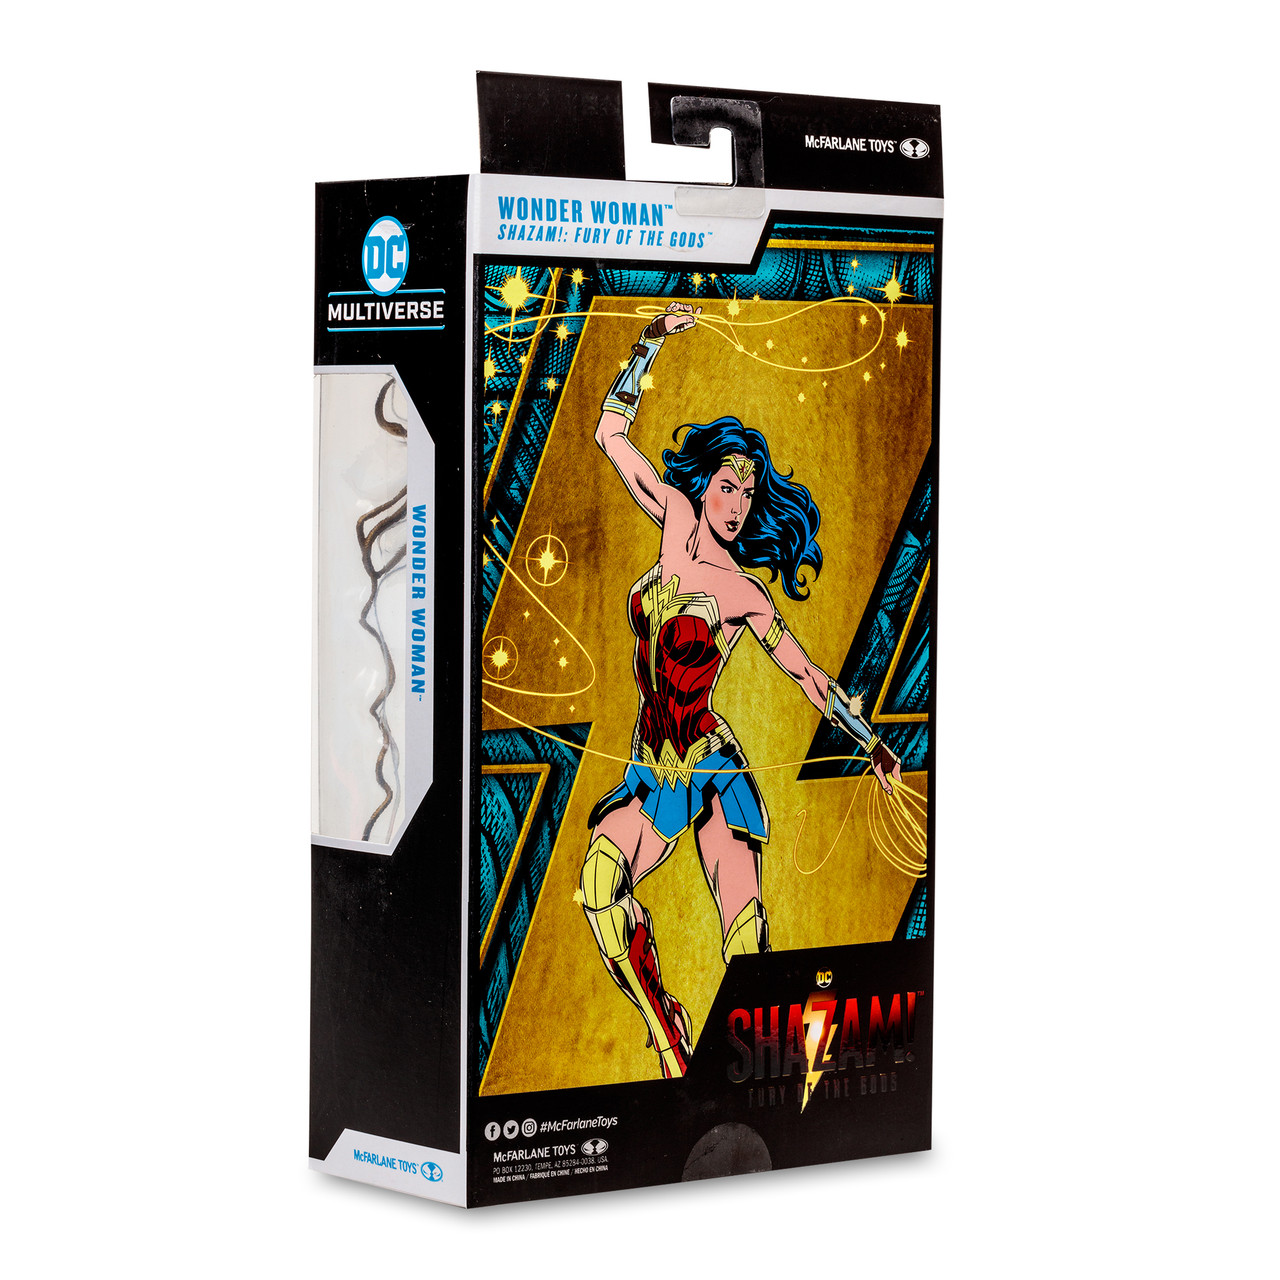 Wonder Woman (Shazam!: Fury of the Gods) 7 Figure - McFarlane